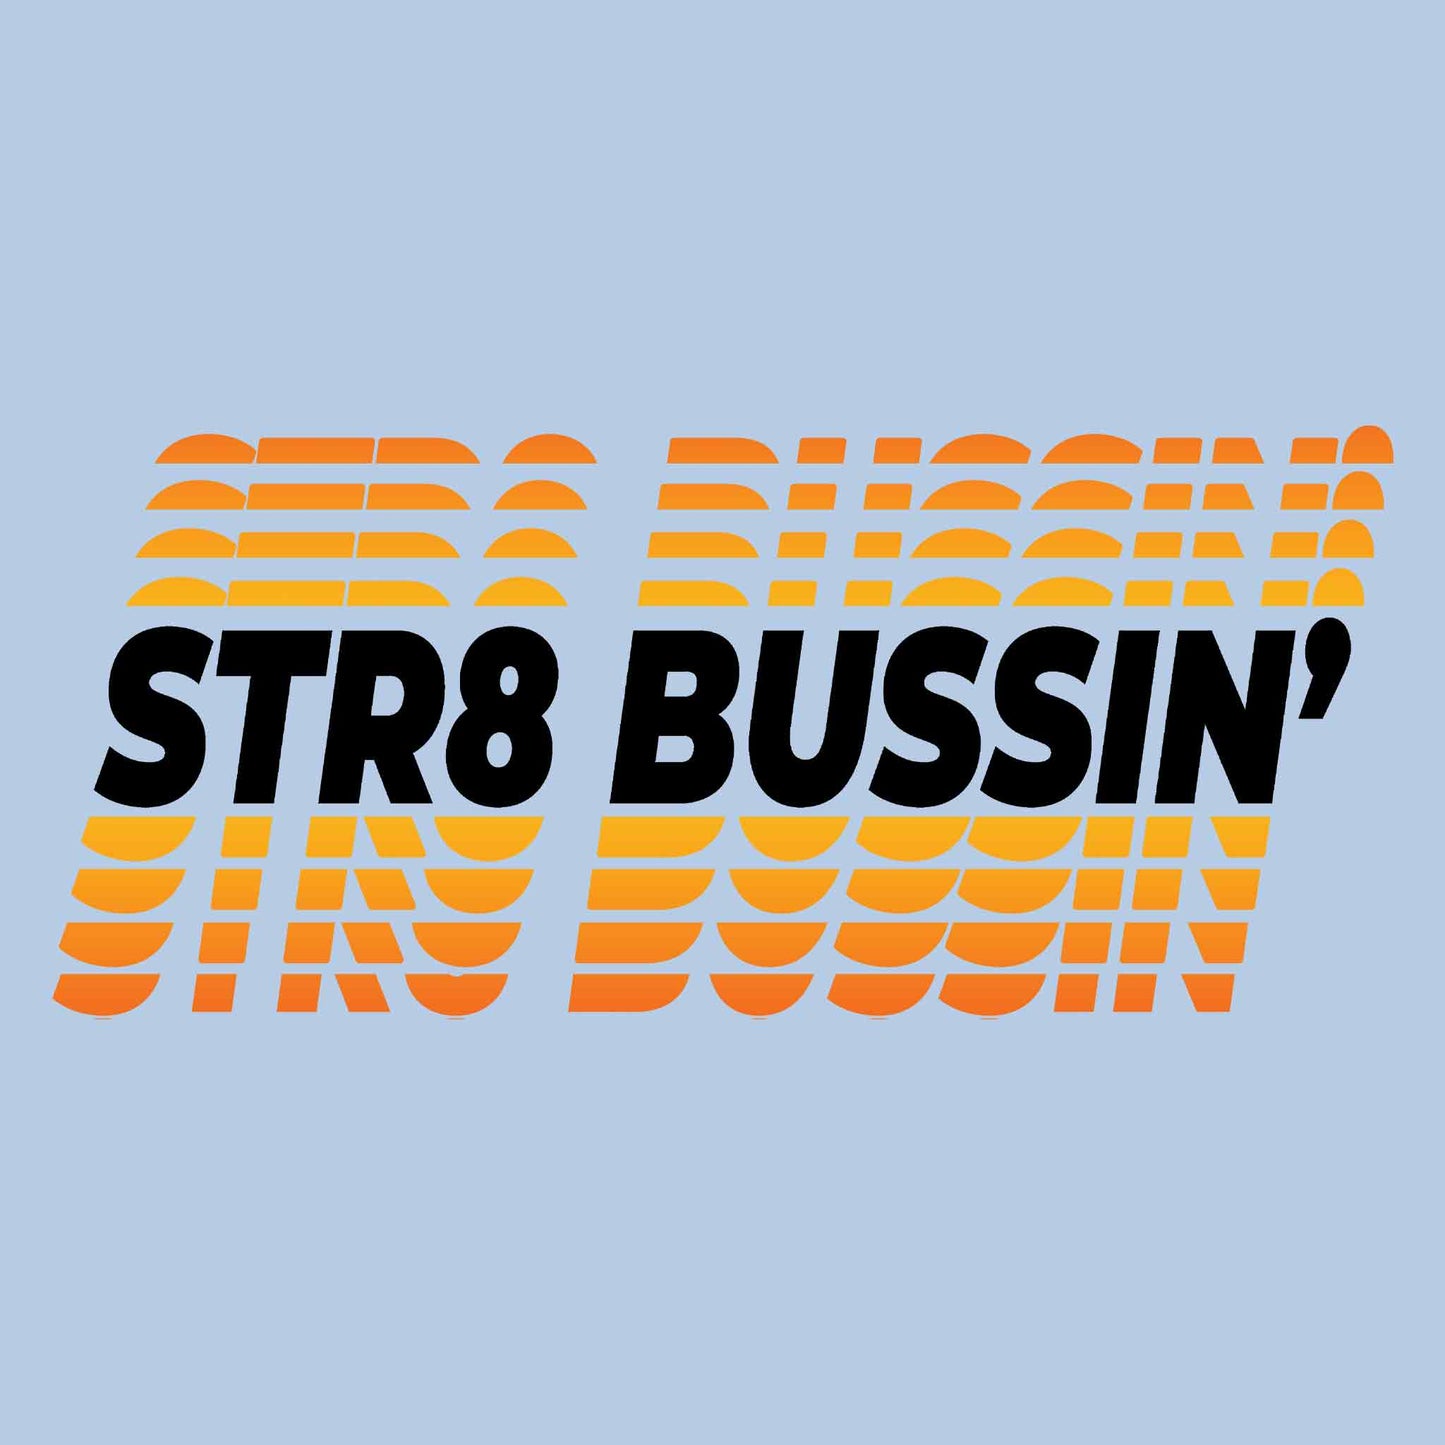 STR8 Bussin' T-Shirt